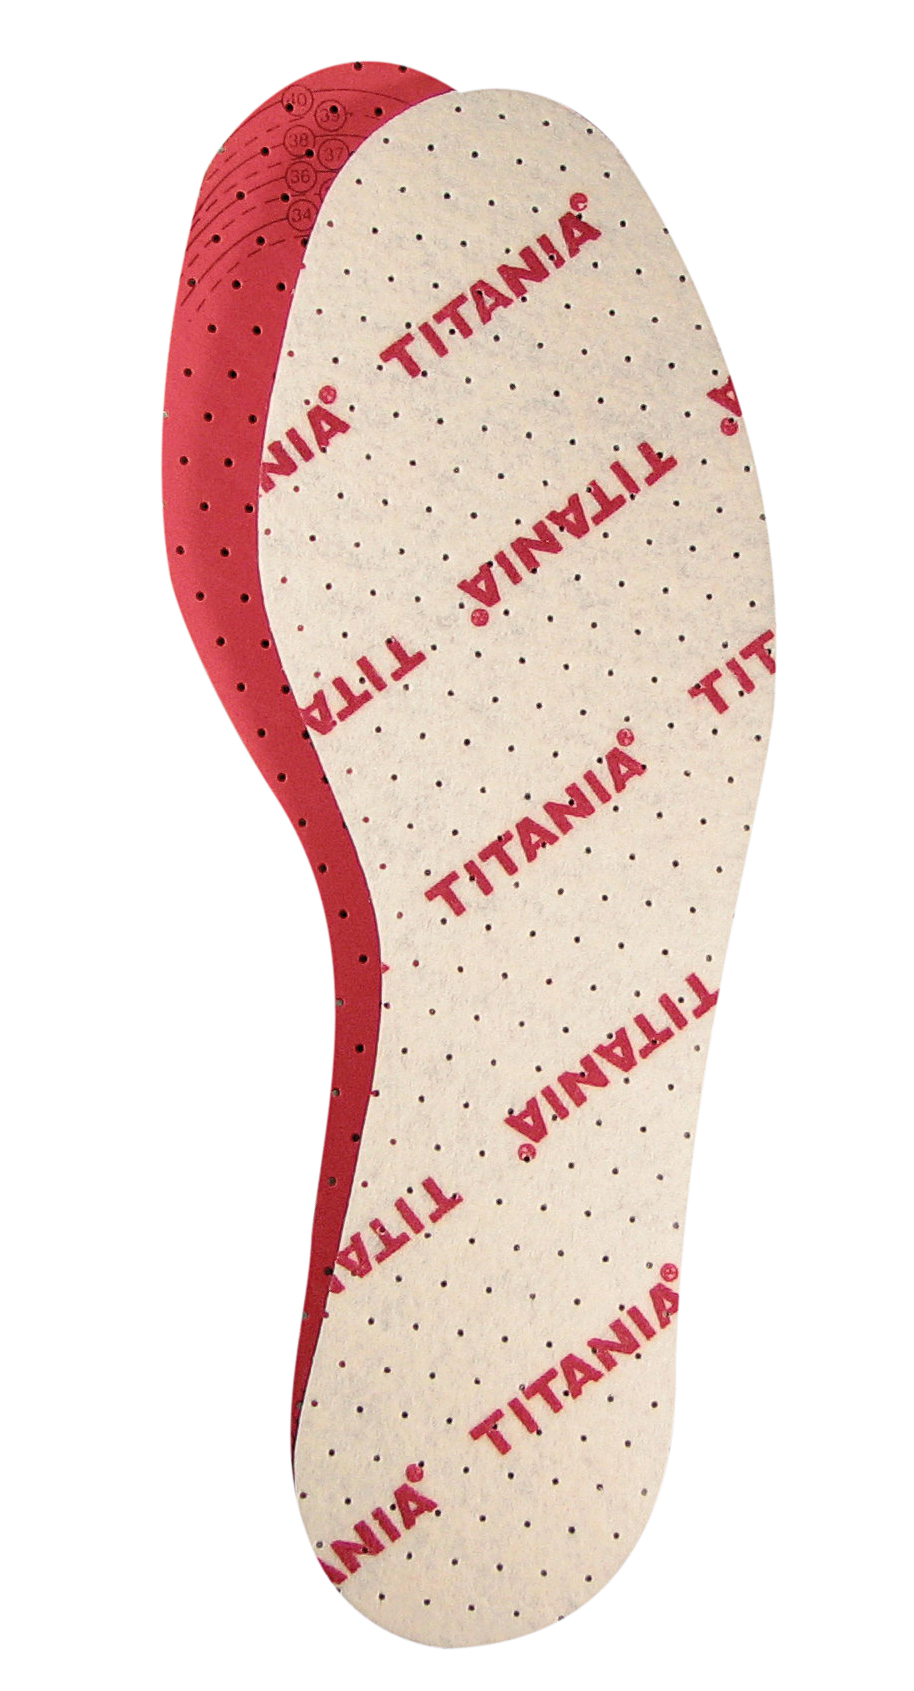 Стельки для обуви Titania Futura, с отверствиями,1 пара (5361/41) - фото 1